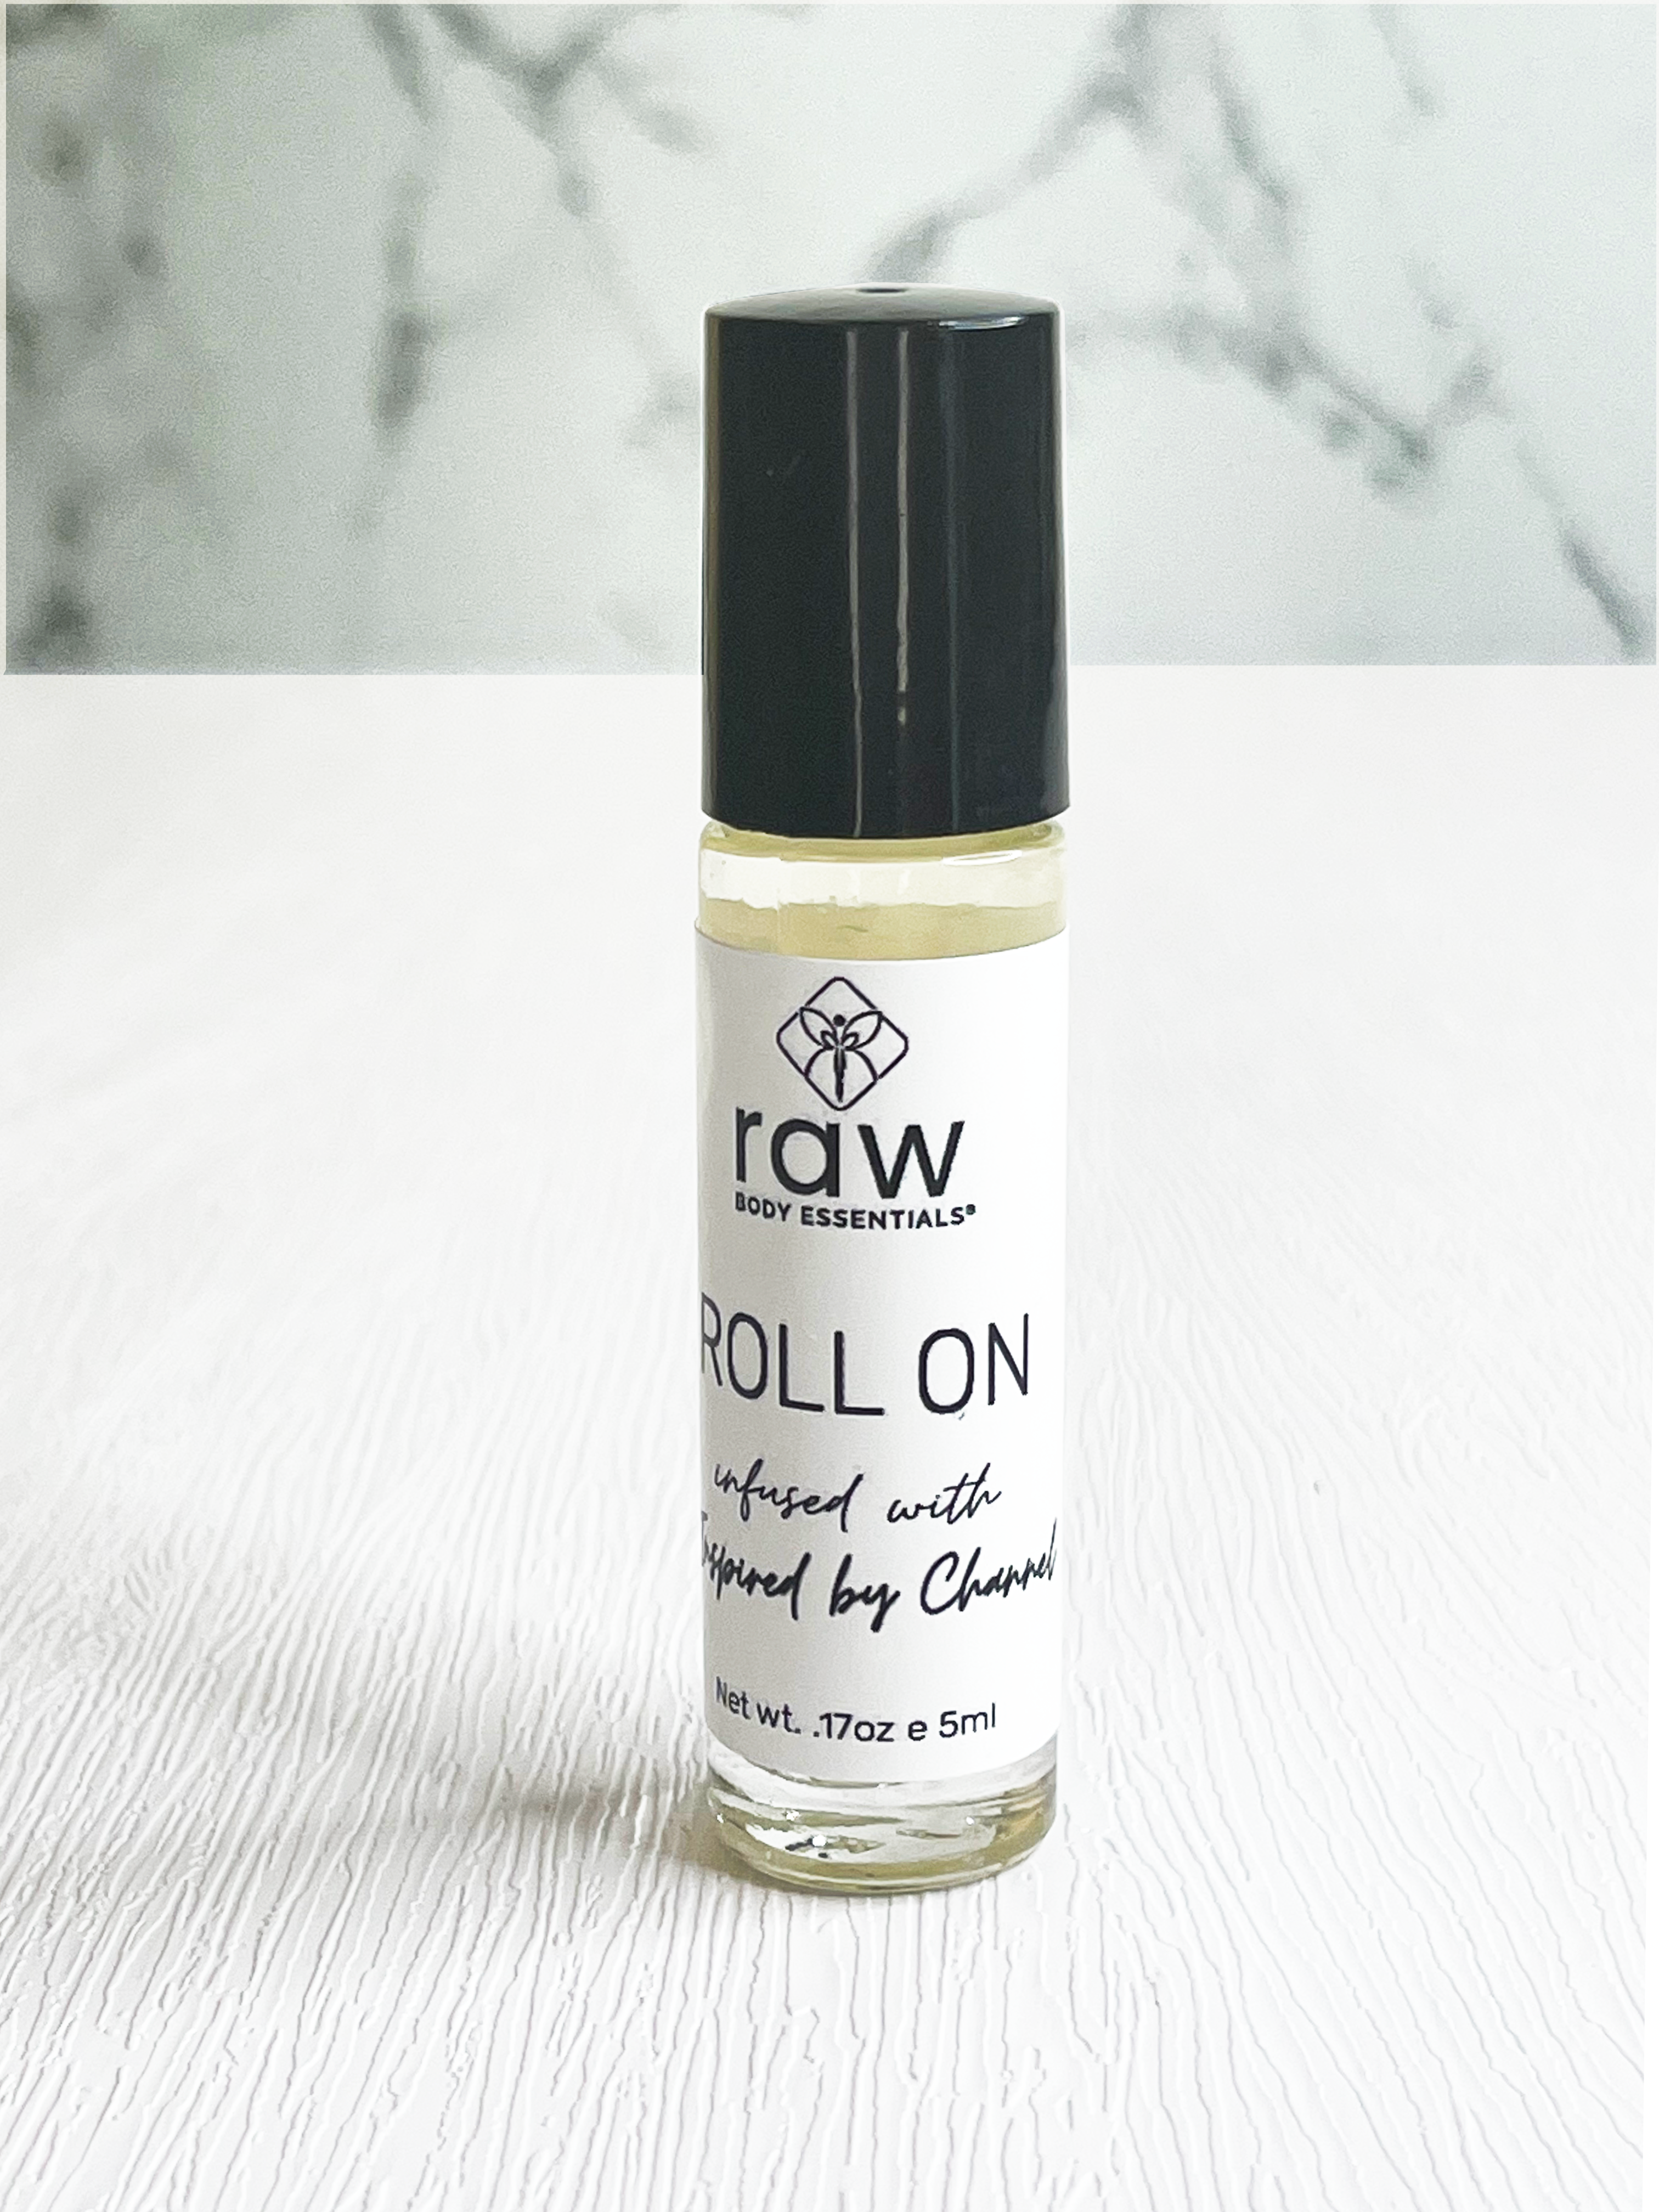 Roll on Body Oil (Perfume)